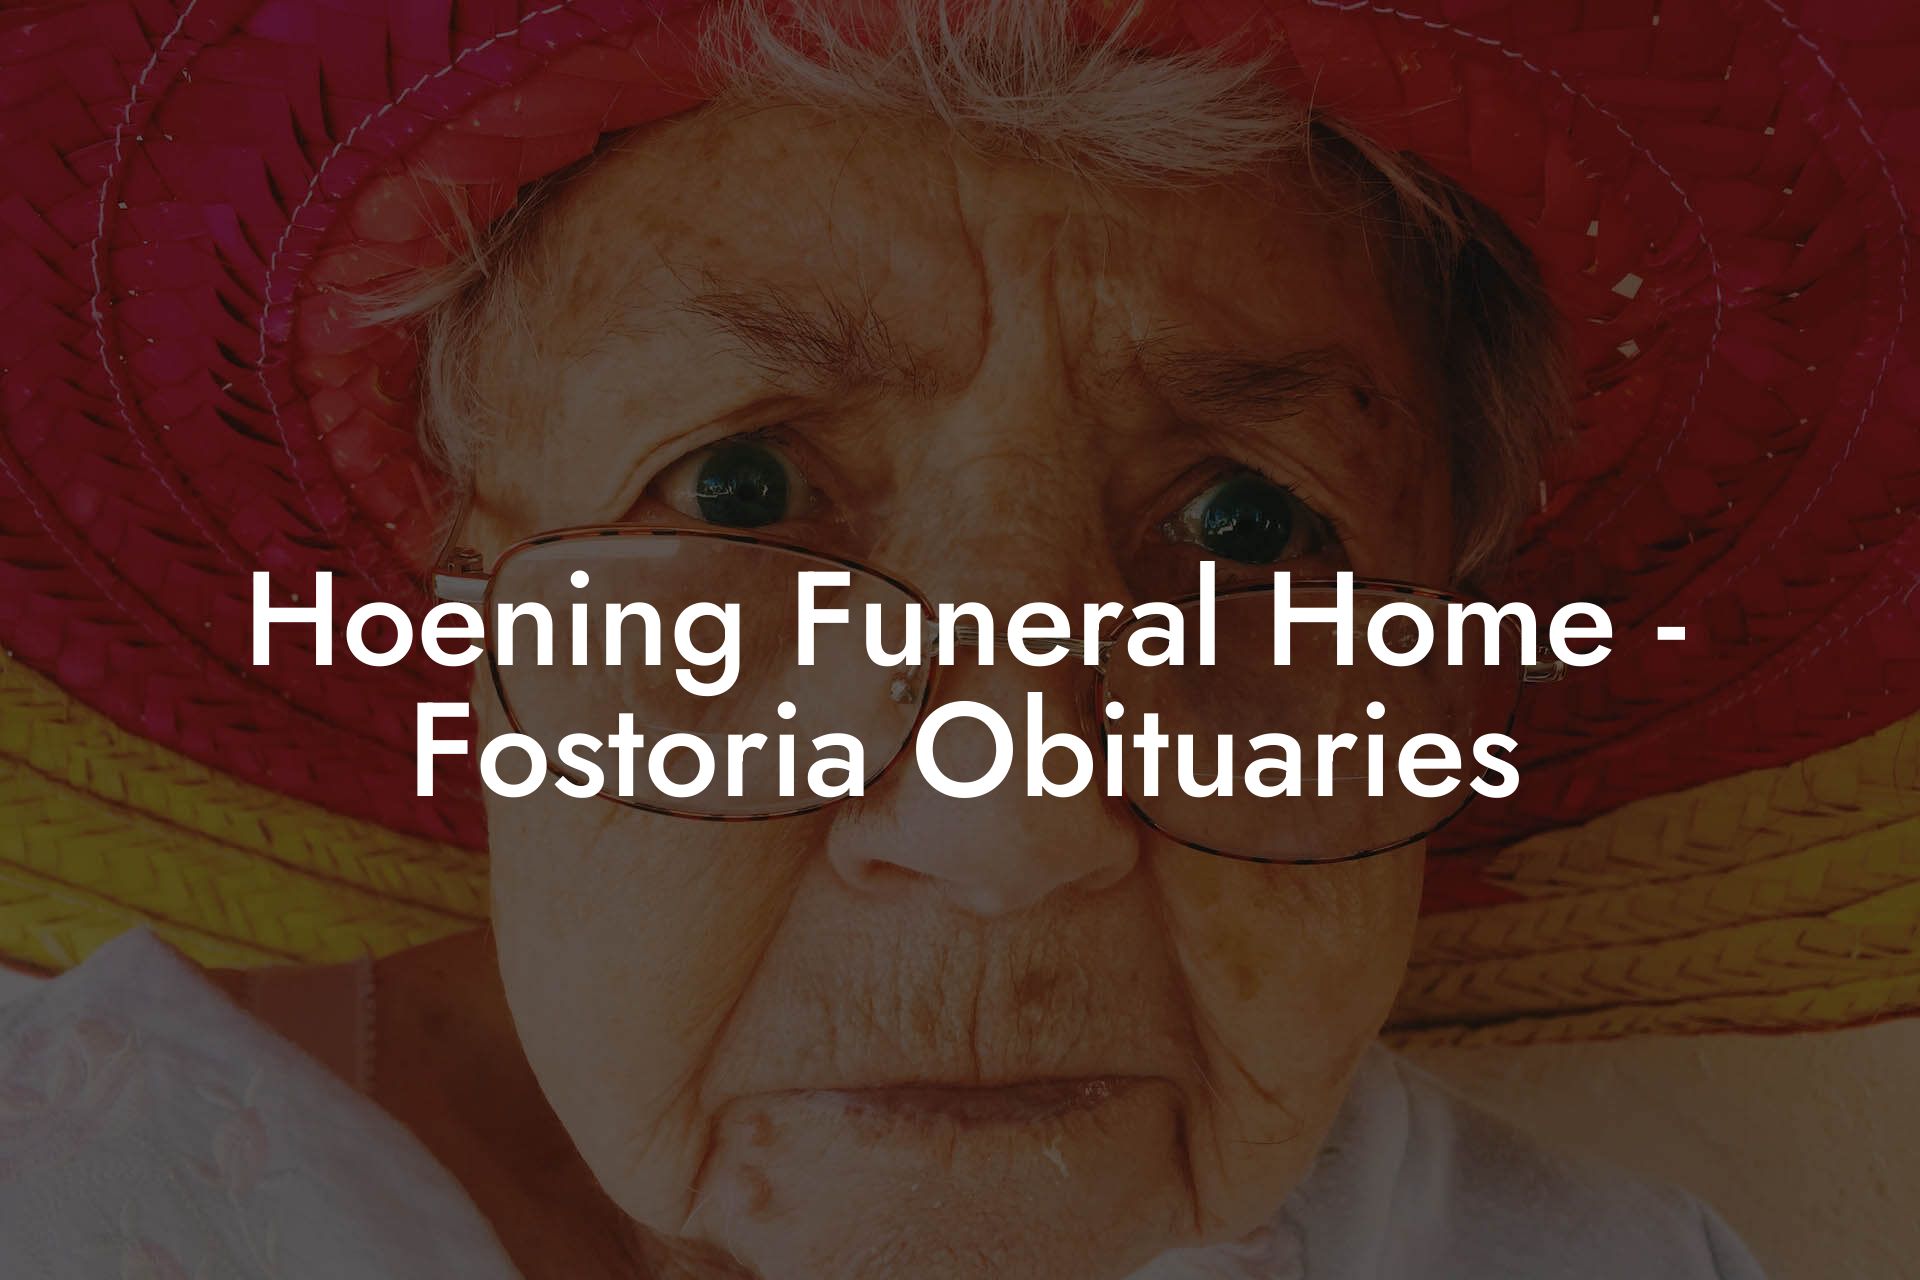 Hoening Funeral Home - Fostoria Obituaries